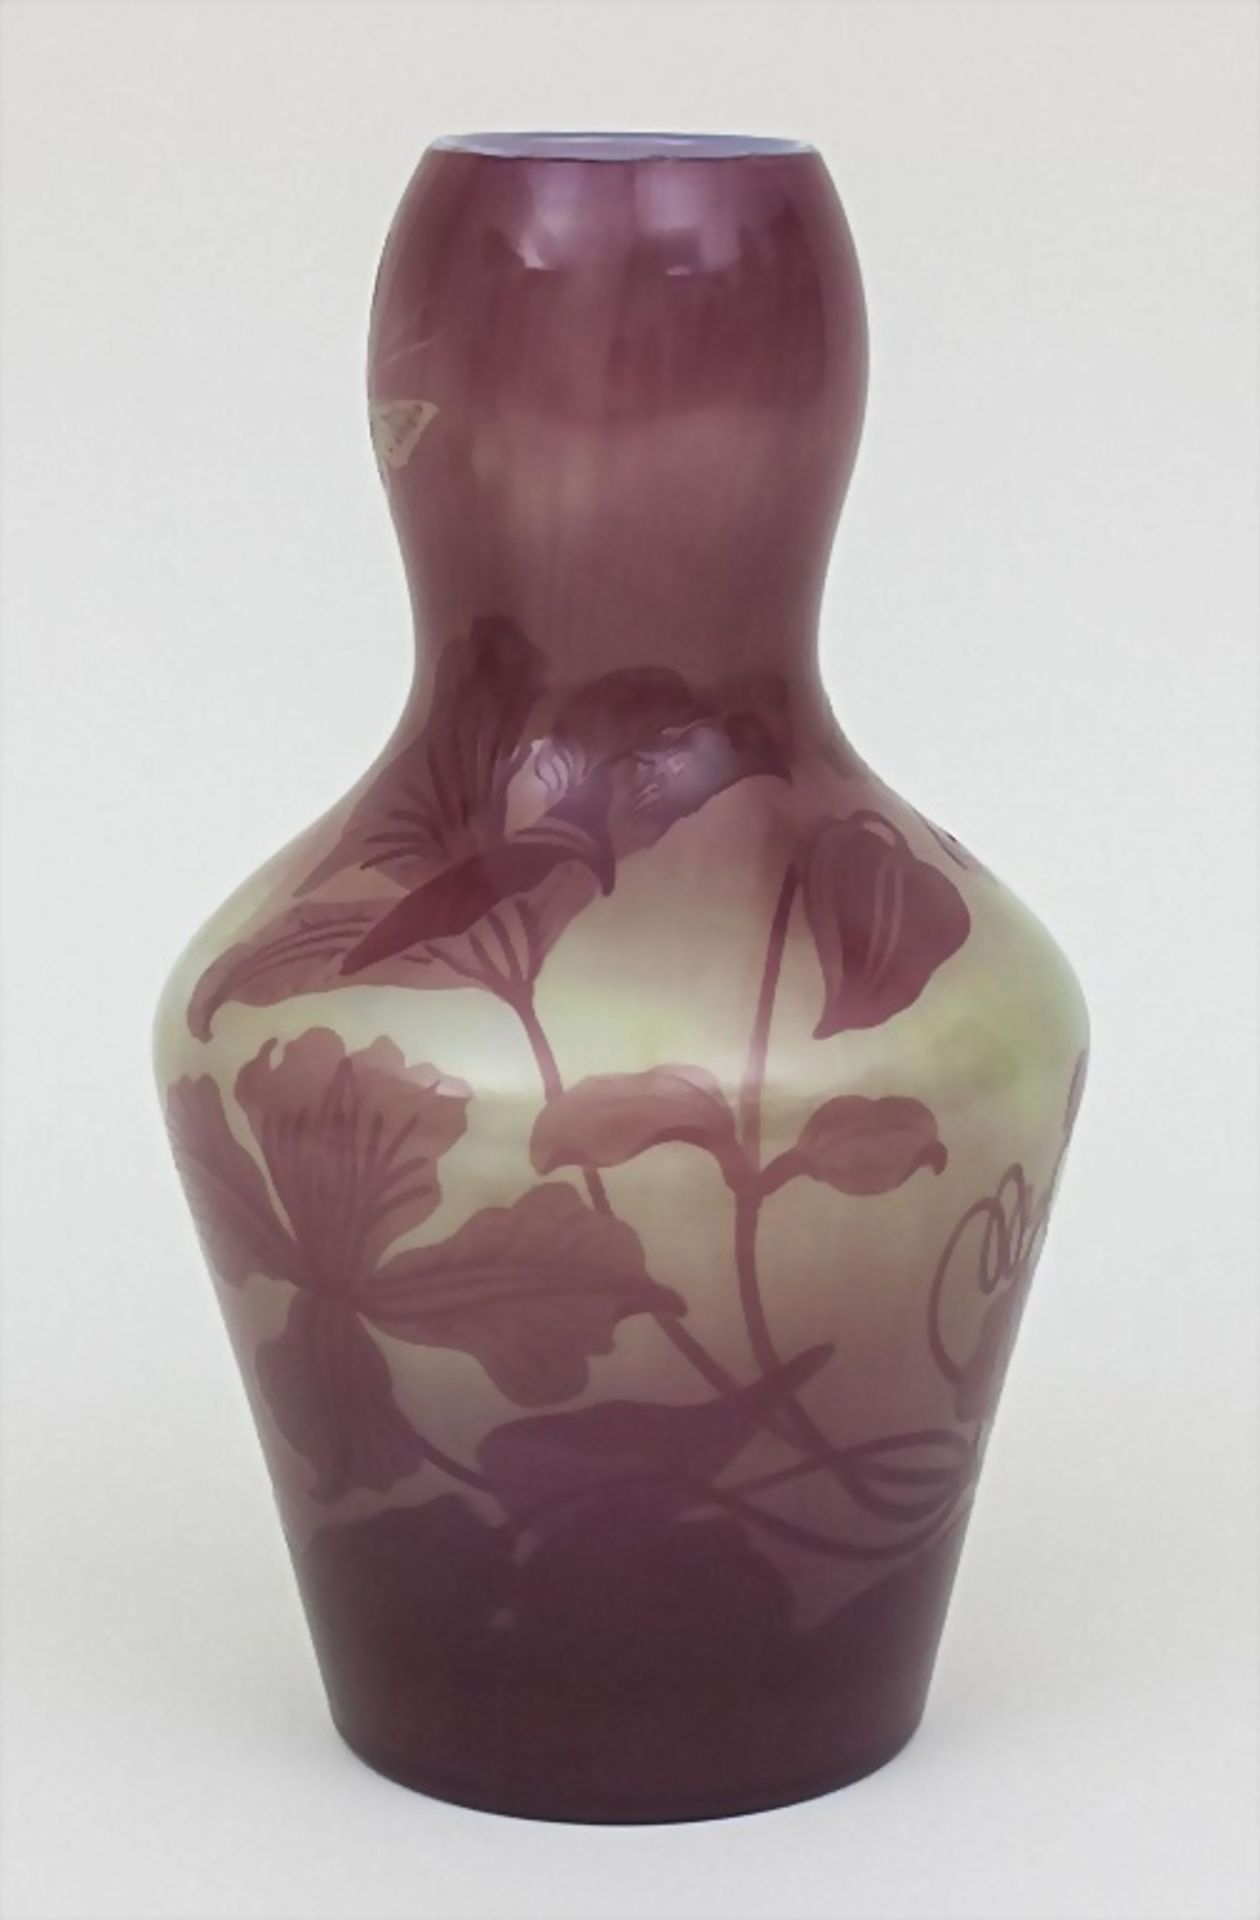 Jugendstil Vase mit Blumenranken und Schmetterlingen / An Art Nouveau Cameo Glass Vase With ... - Image 2 of 5